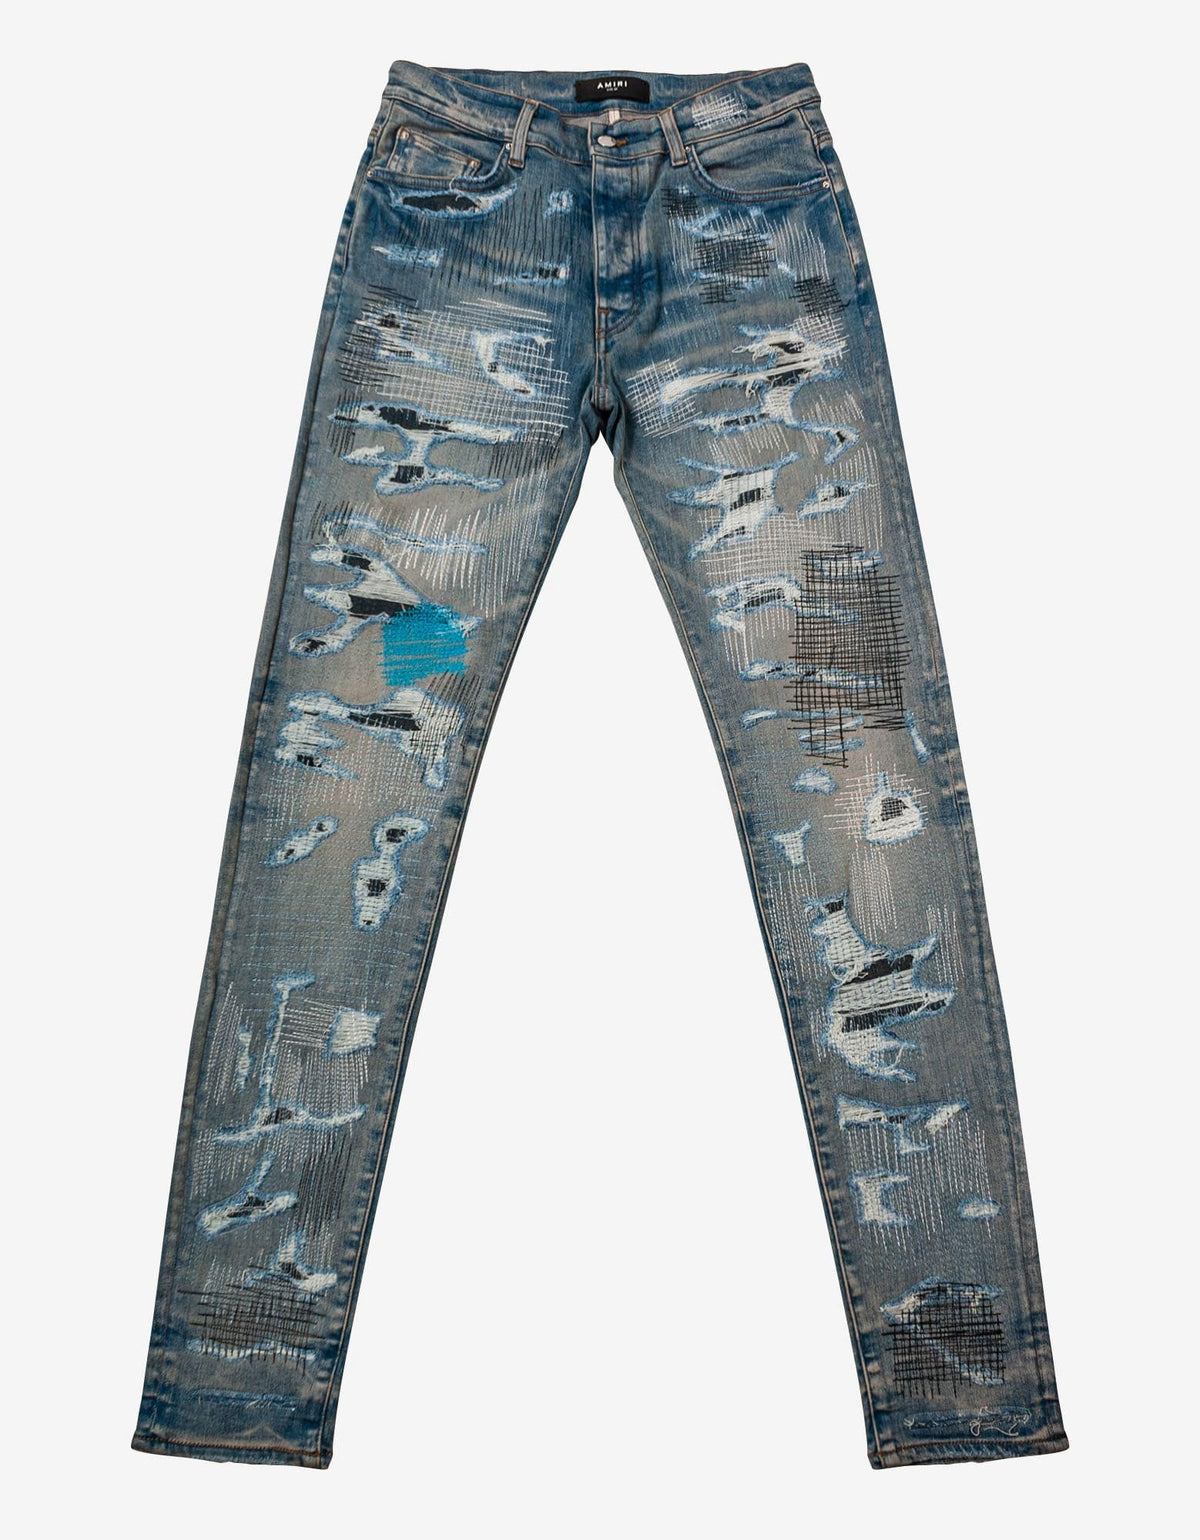 Amiri Jeans All Over Repair Clay Indigo